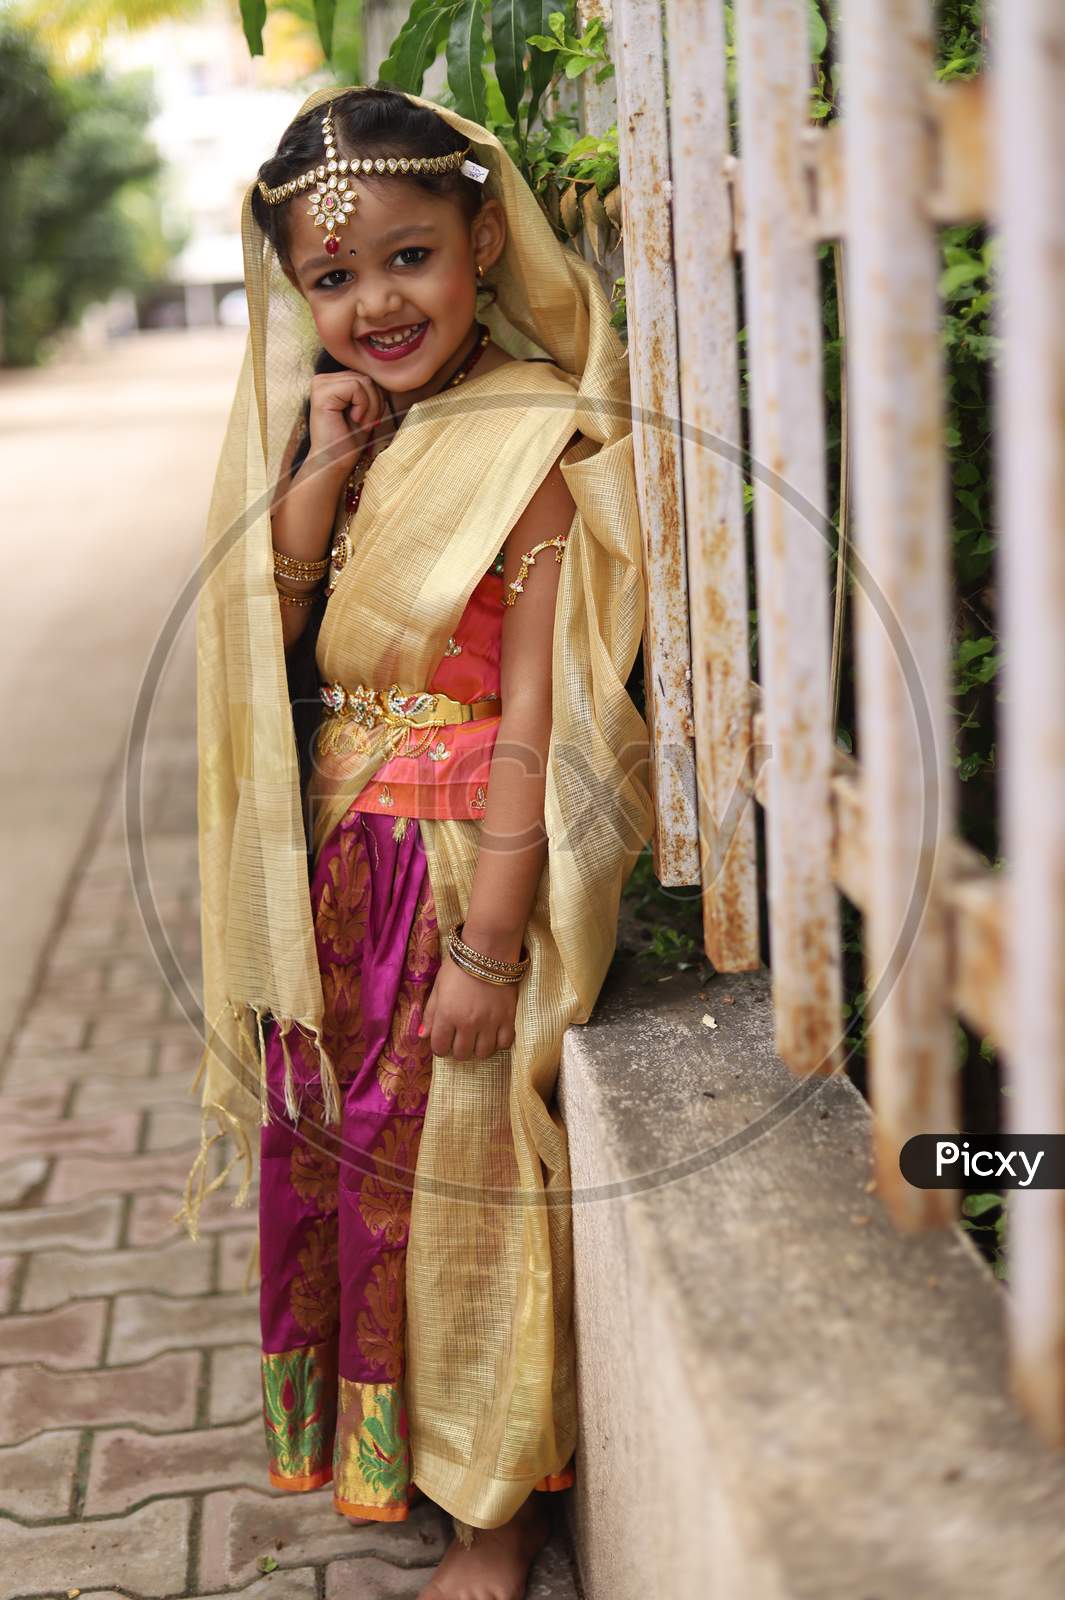 Cute littl girl dressed as Radha for celebrating janmasthmai